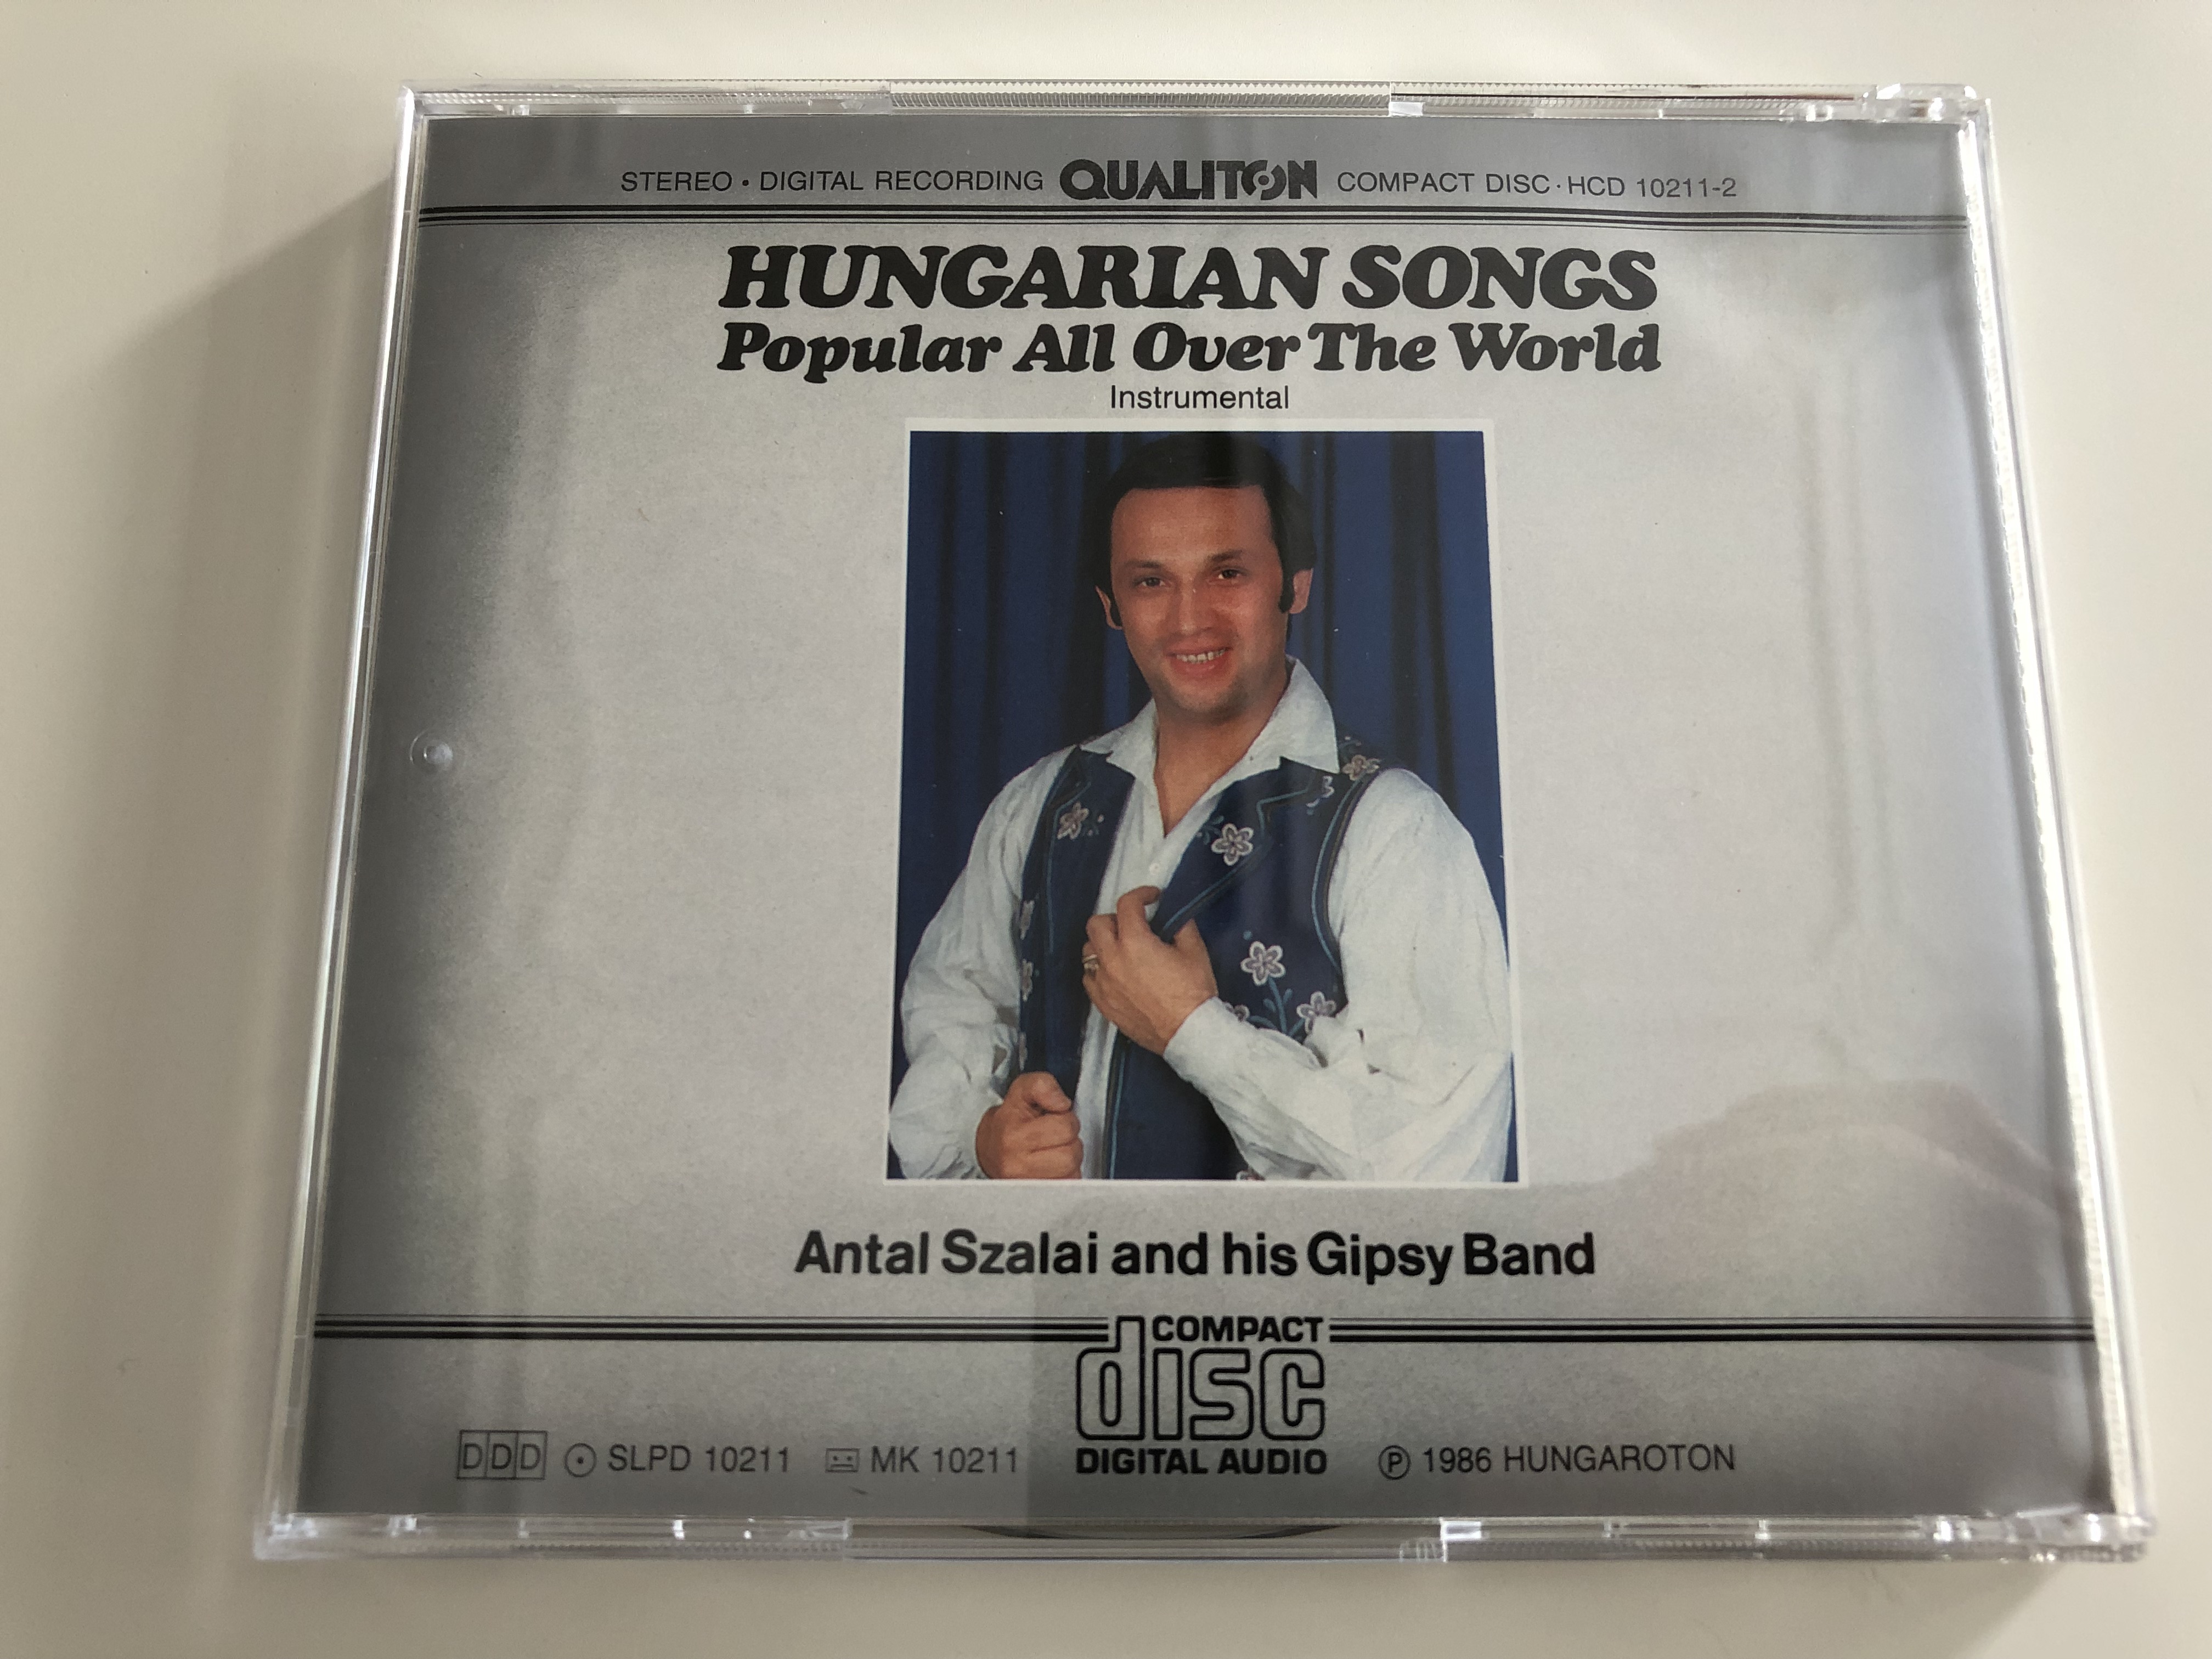 helyre-kati-hungarian-songs-popular-all-over-the-world-instrumental-antal-szalai-and-his-gipsy-band-qualiton-hcd-10211-2-audio-cd-1986-hungaroton-4-.jpg